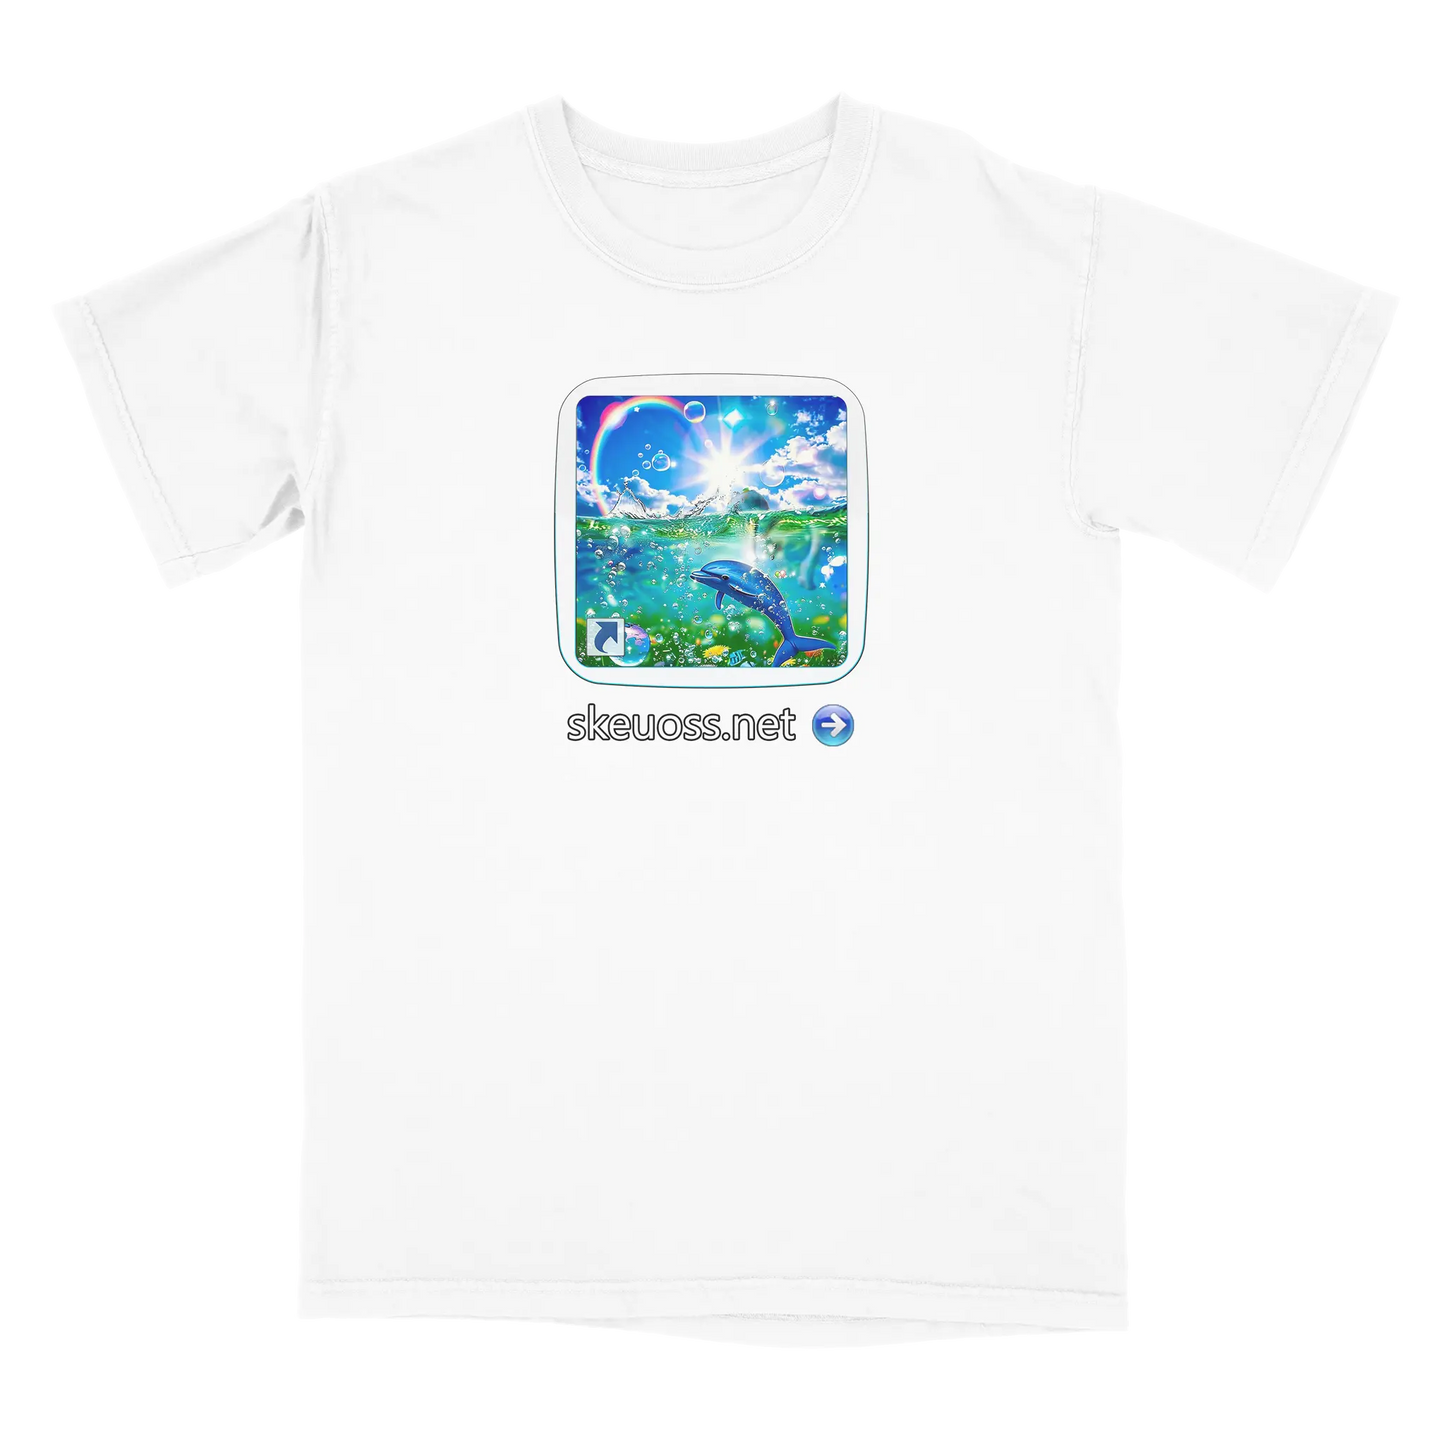 Frutiger Aero T-shirt - User Login Collection - User 294